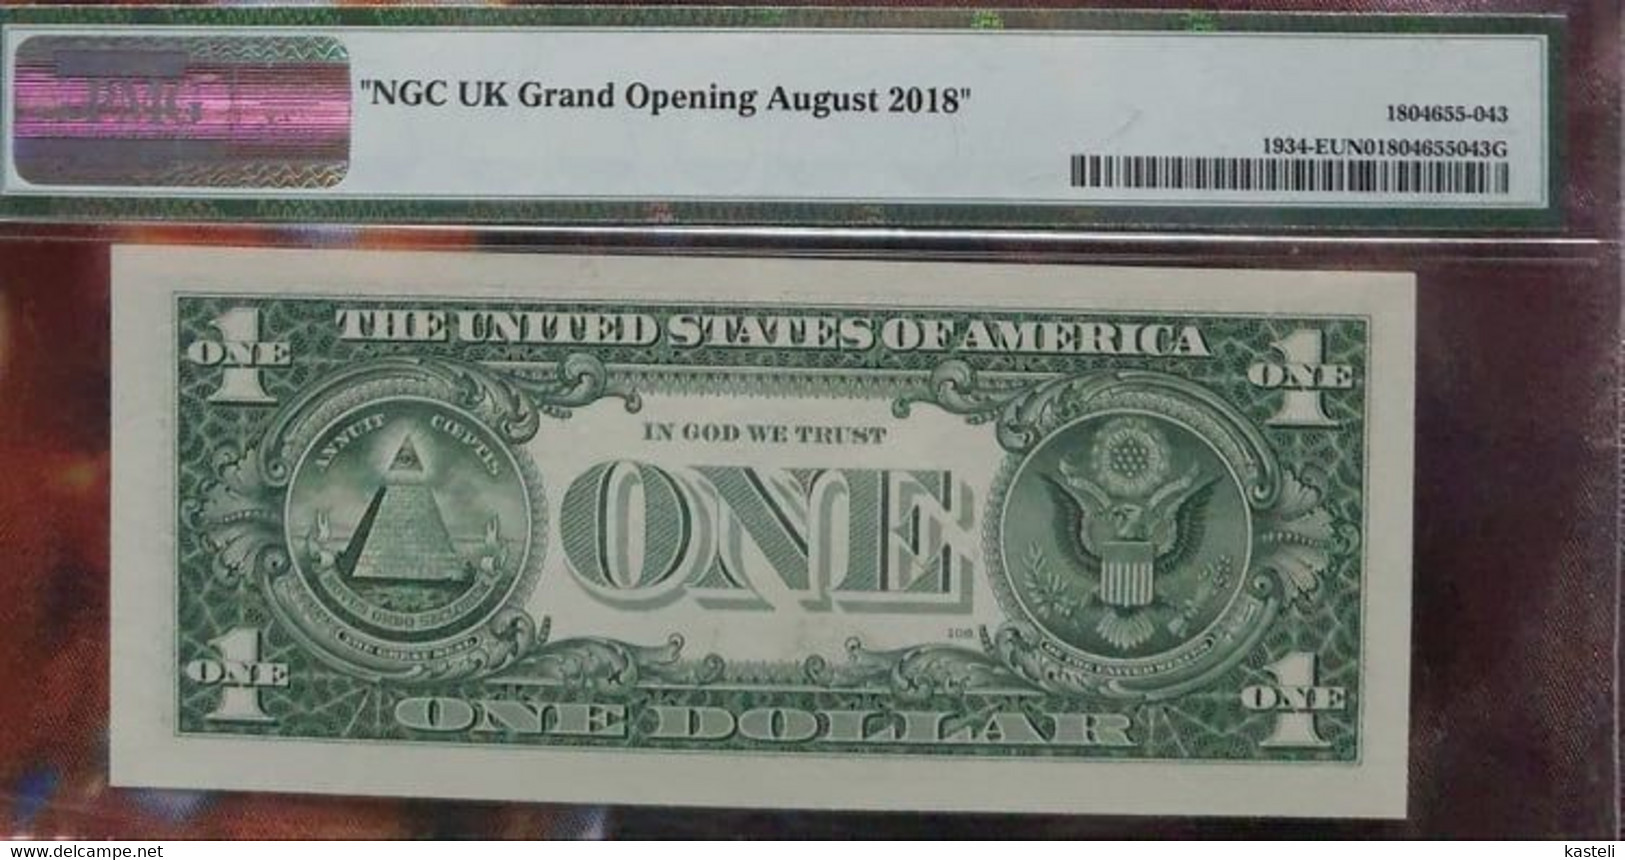 USA  United States Of America  1 $  2009 - Biljetten Van De Verenigde Staten (1928-1953)